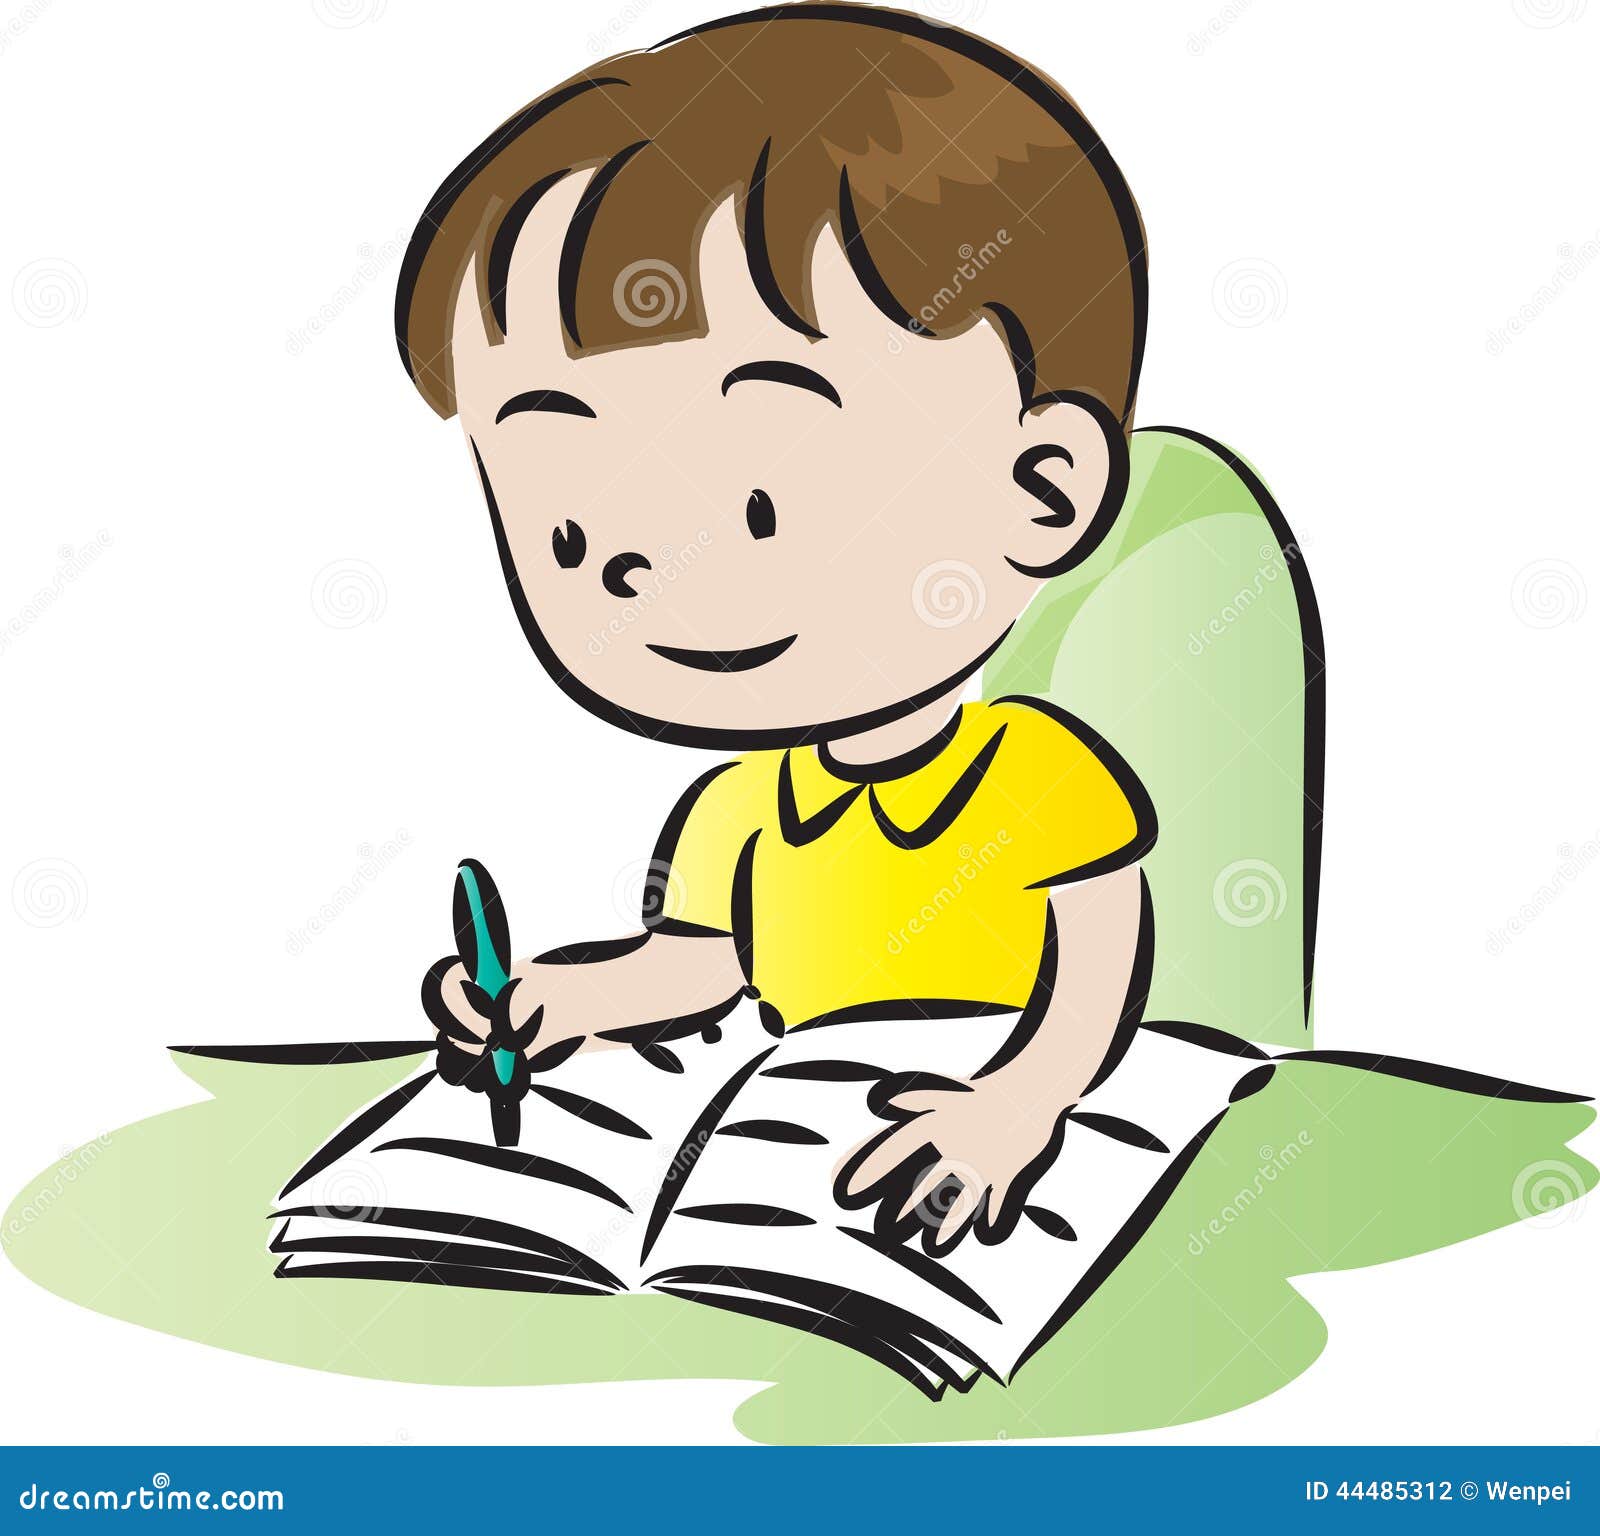 a kid doing homework drawing